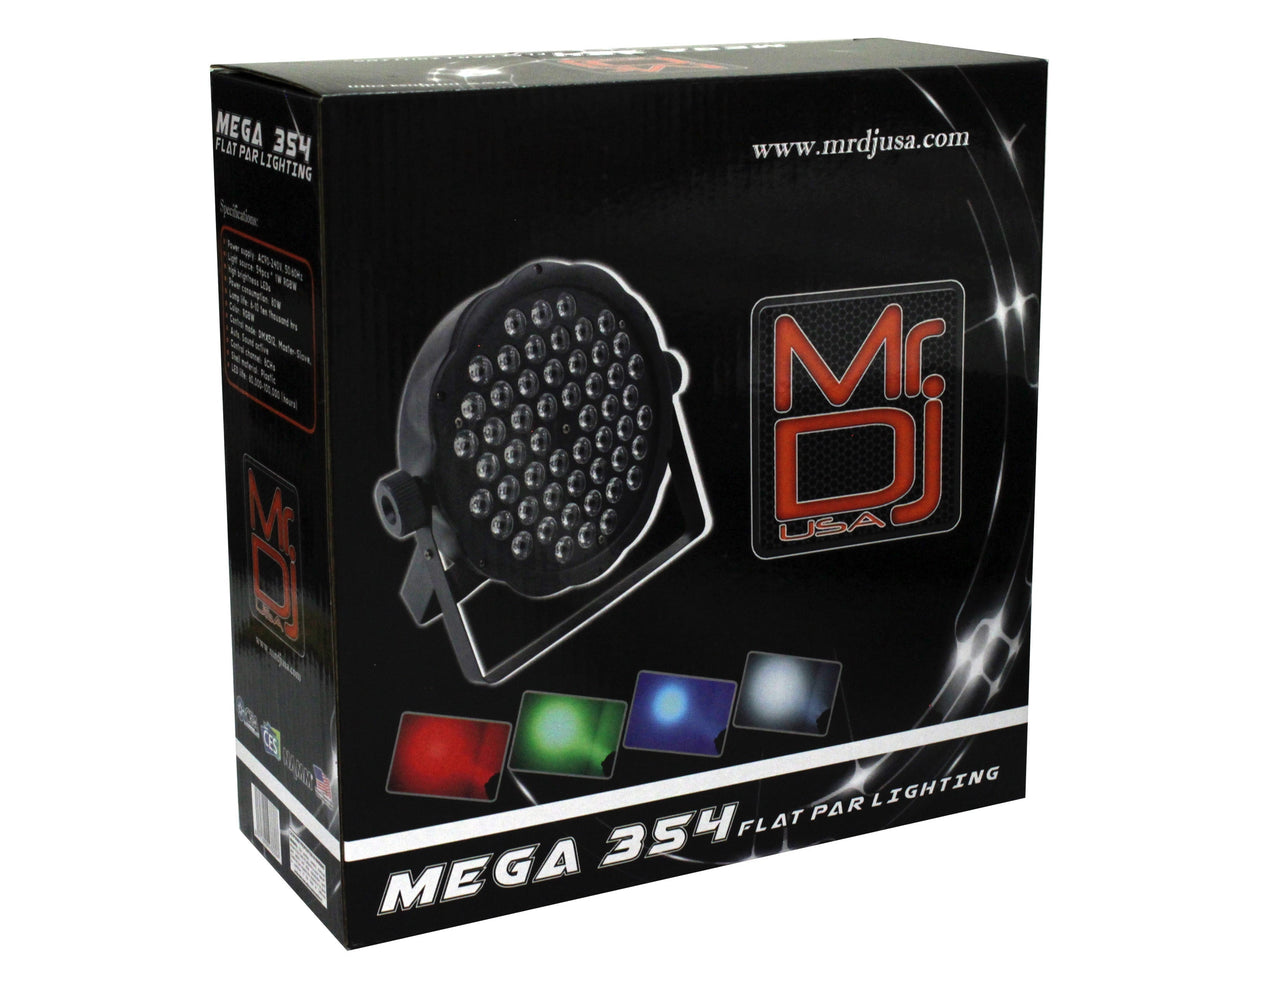 6 MR DJ MEGA354 Slim Disco DJ Party Club Stage Show Lighting Flat Par Wash Lighting